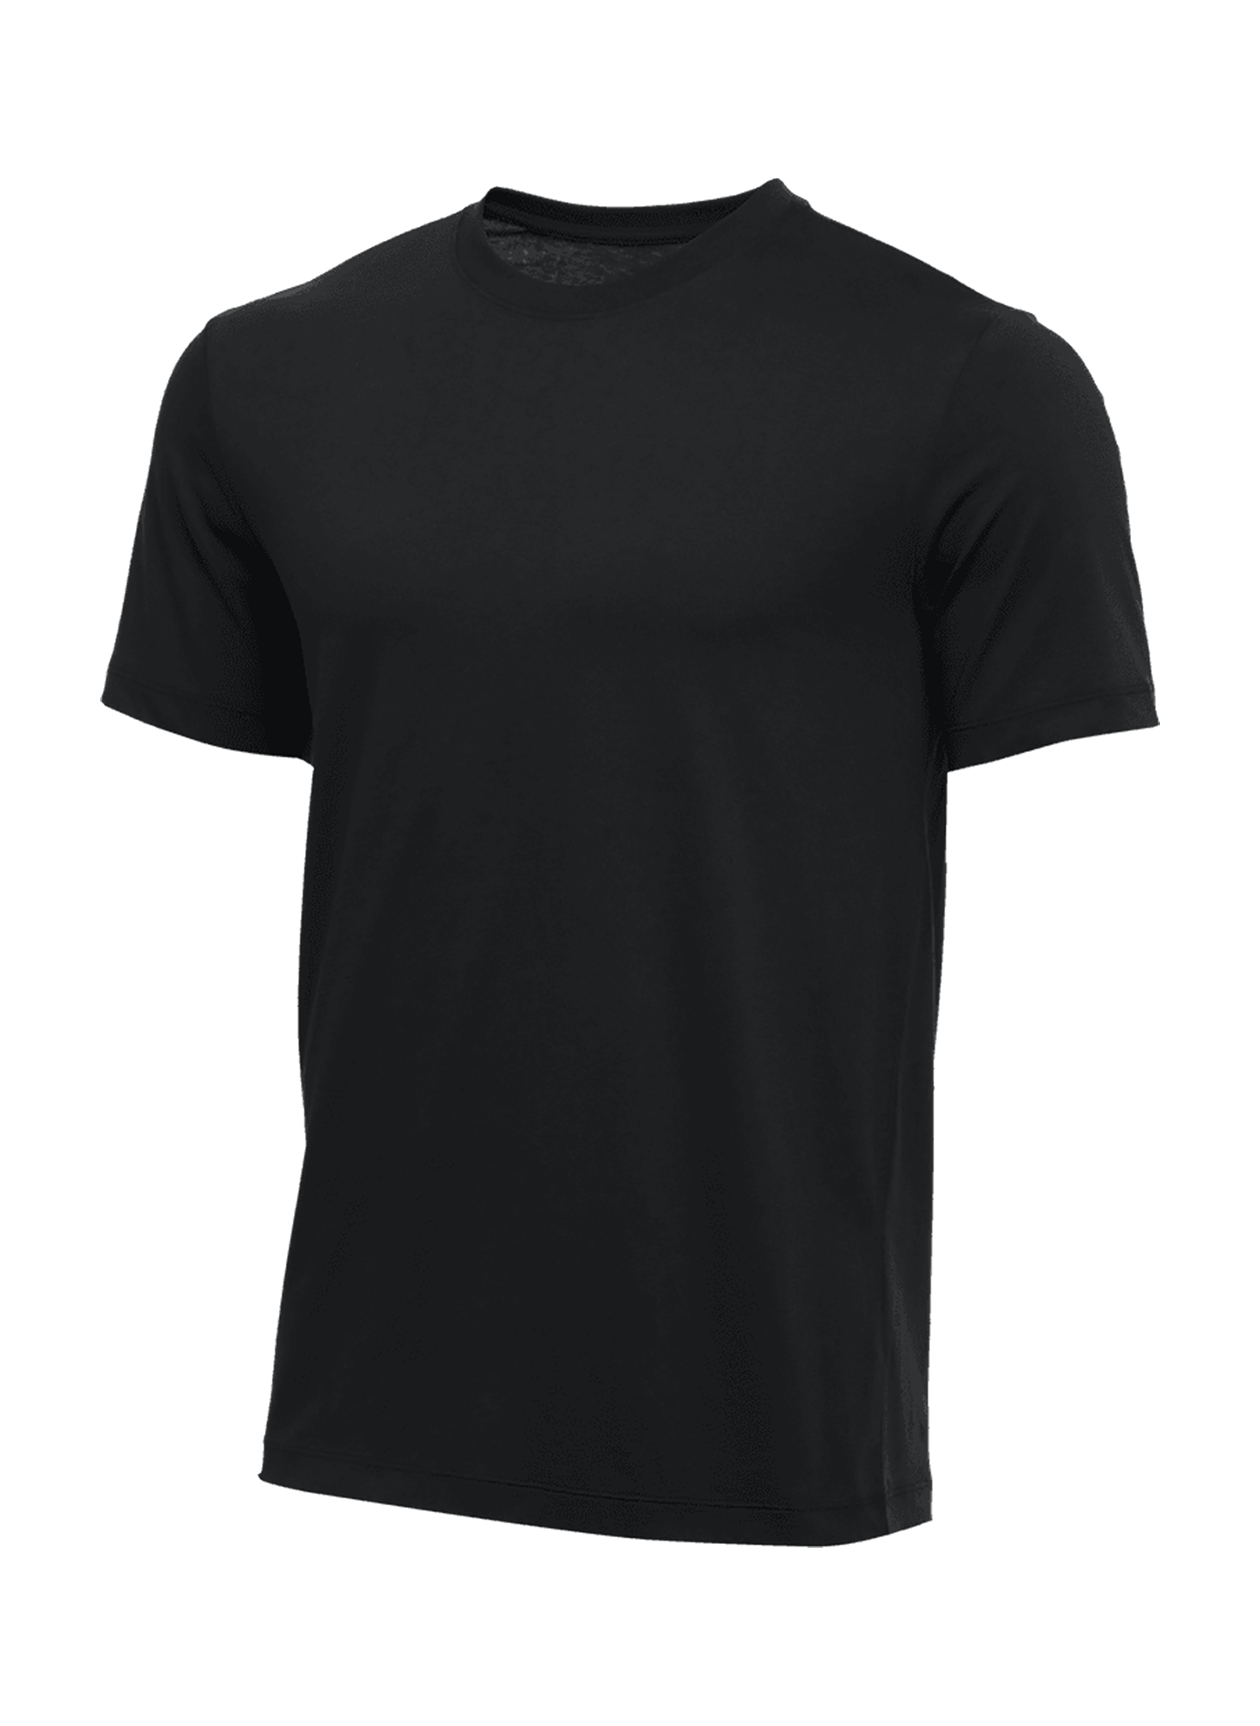 accessoires wenselijk kompas Nike Men's Short-Sleeve Crew | Nike Custom Made T-Shirts